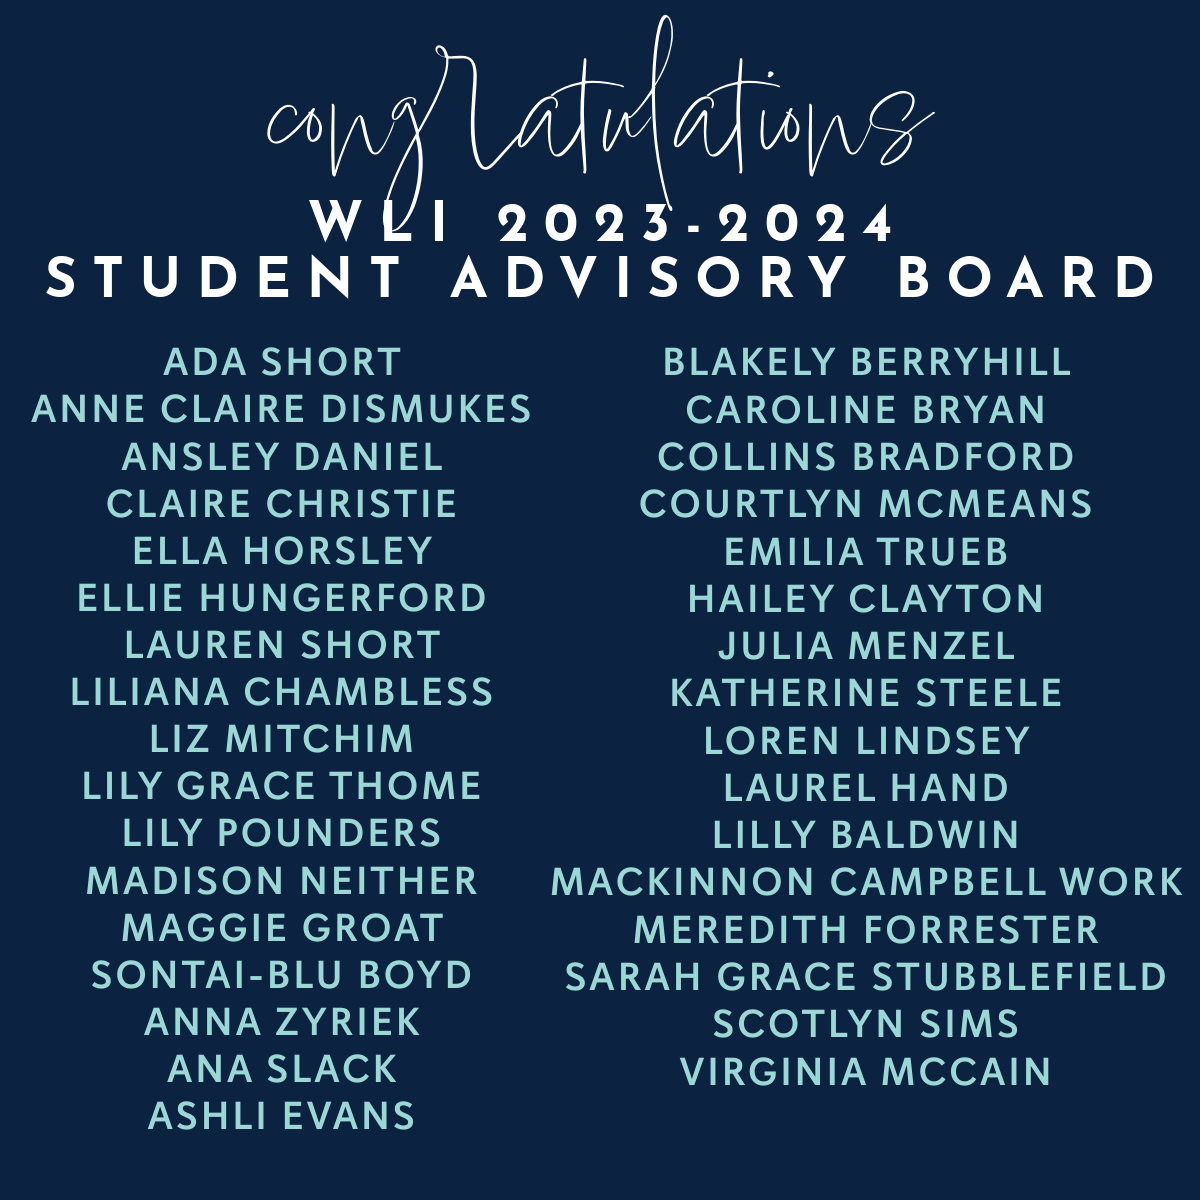 List of WLI 2023-2024 Student Advisory Board